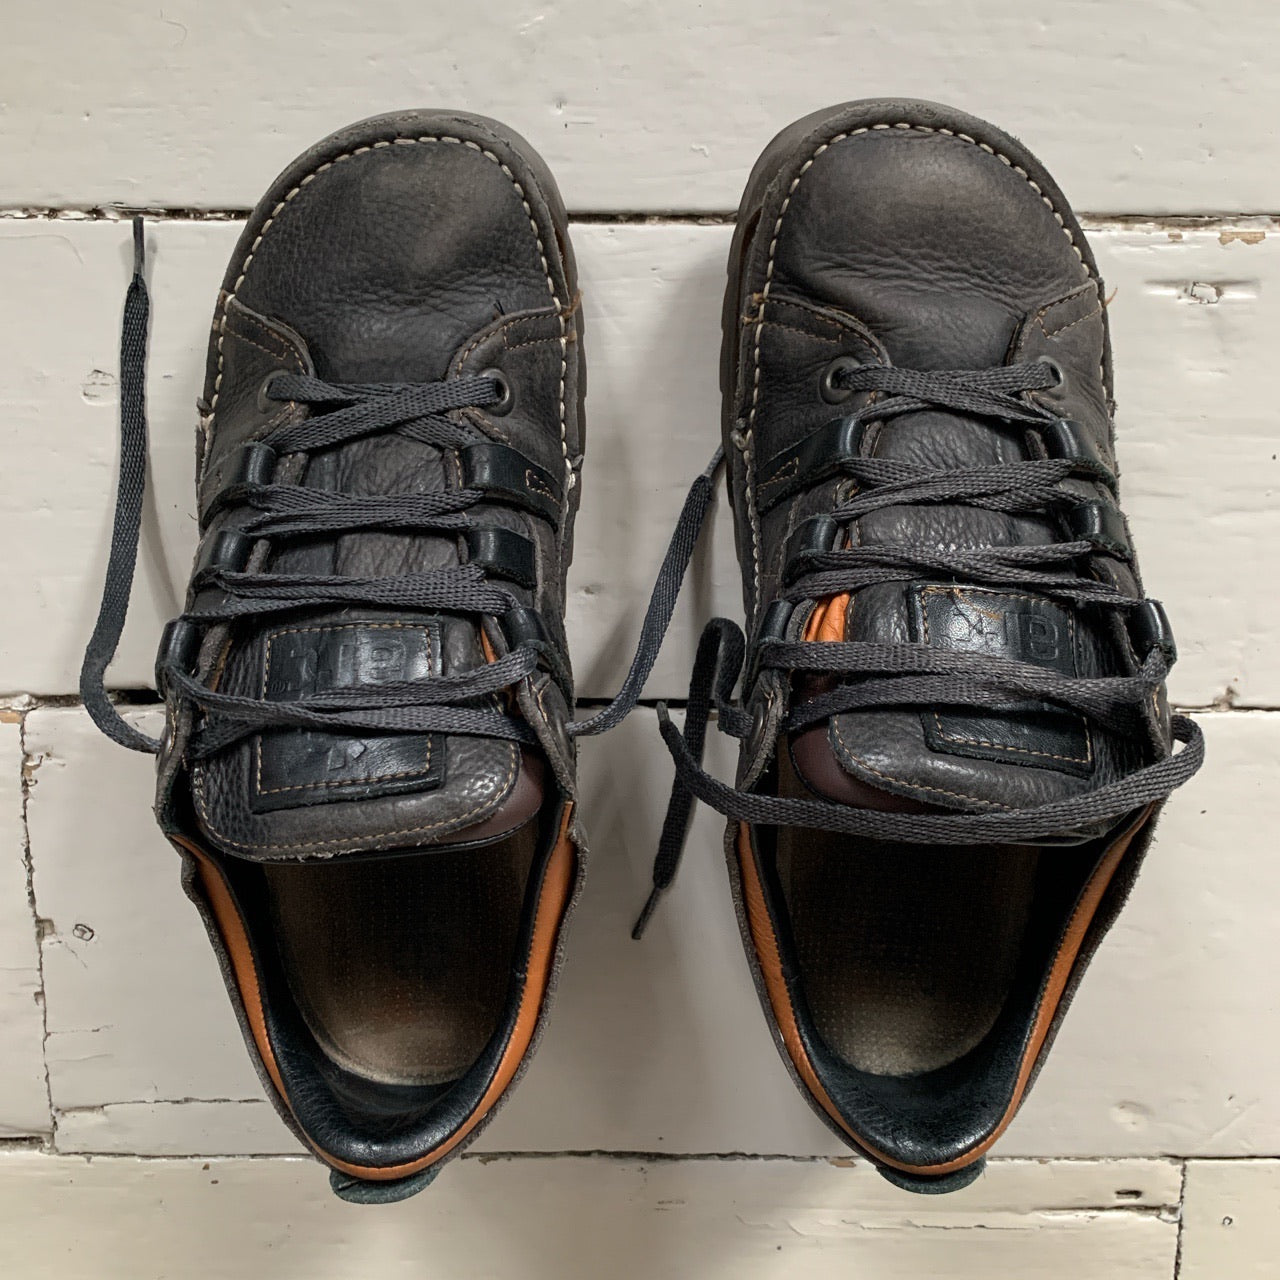 The Art Company Shoes (UK 9)